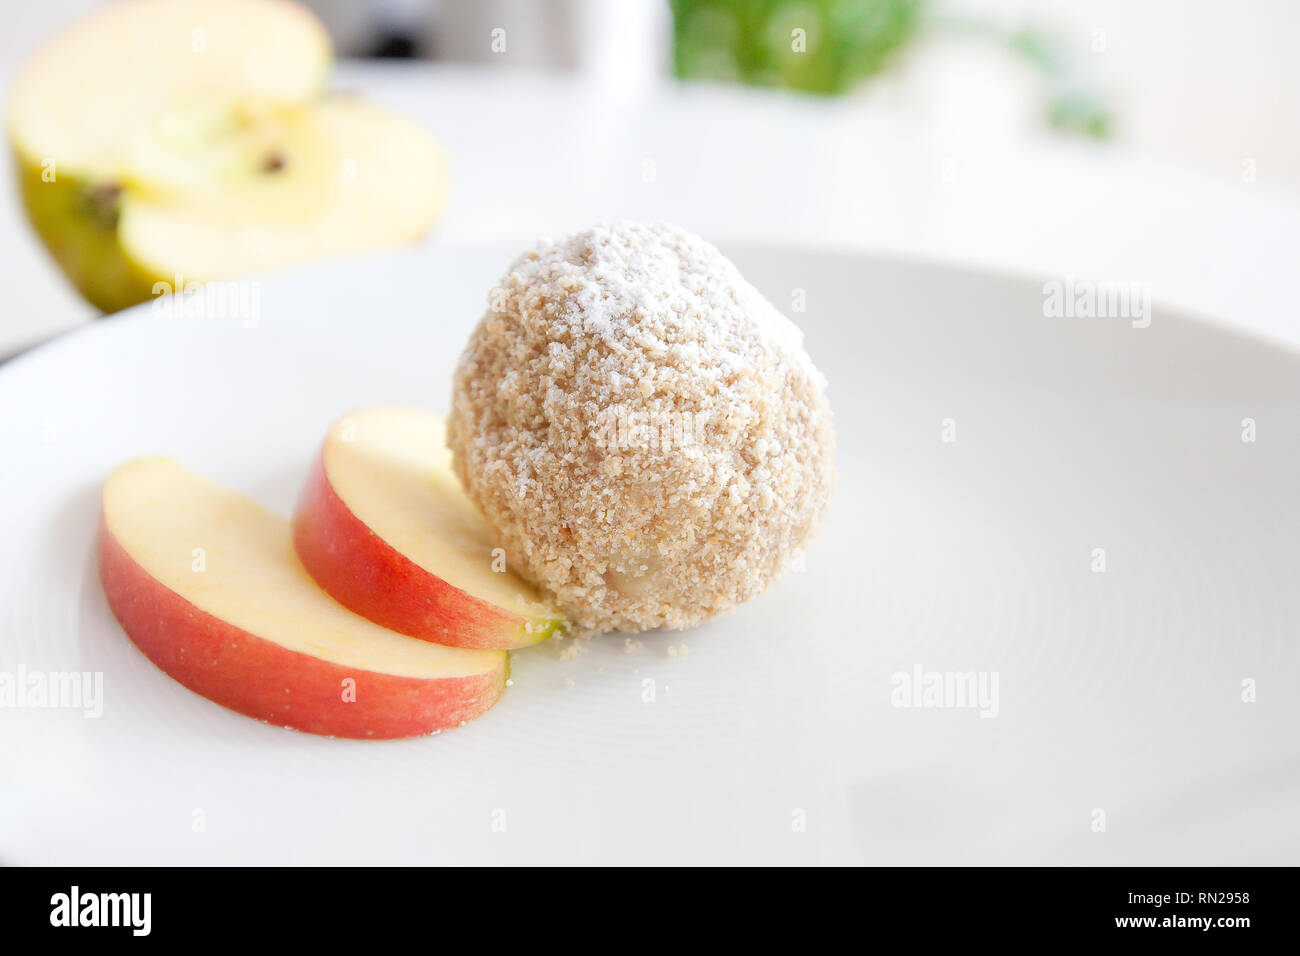 Potato dumplings with apple fullness photographed on white plate Stock Photo